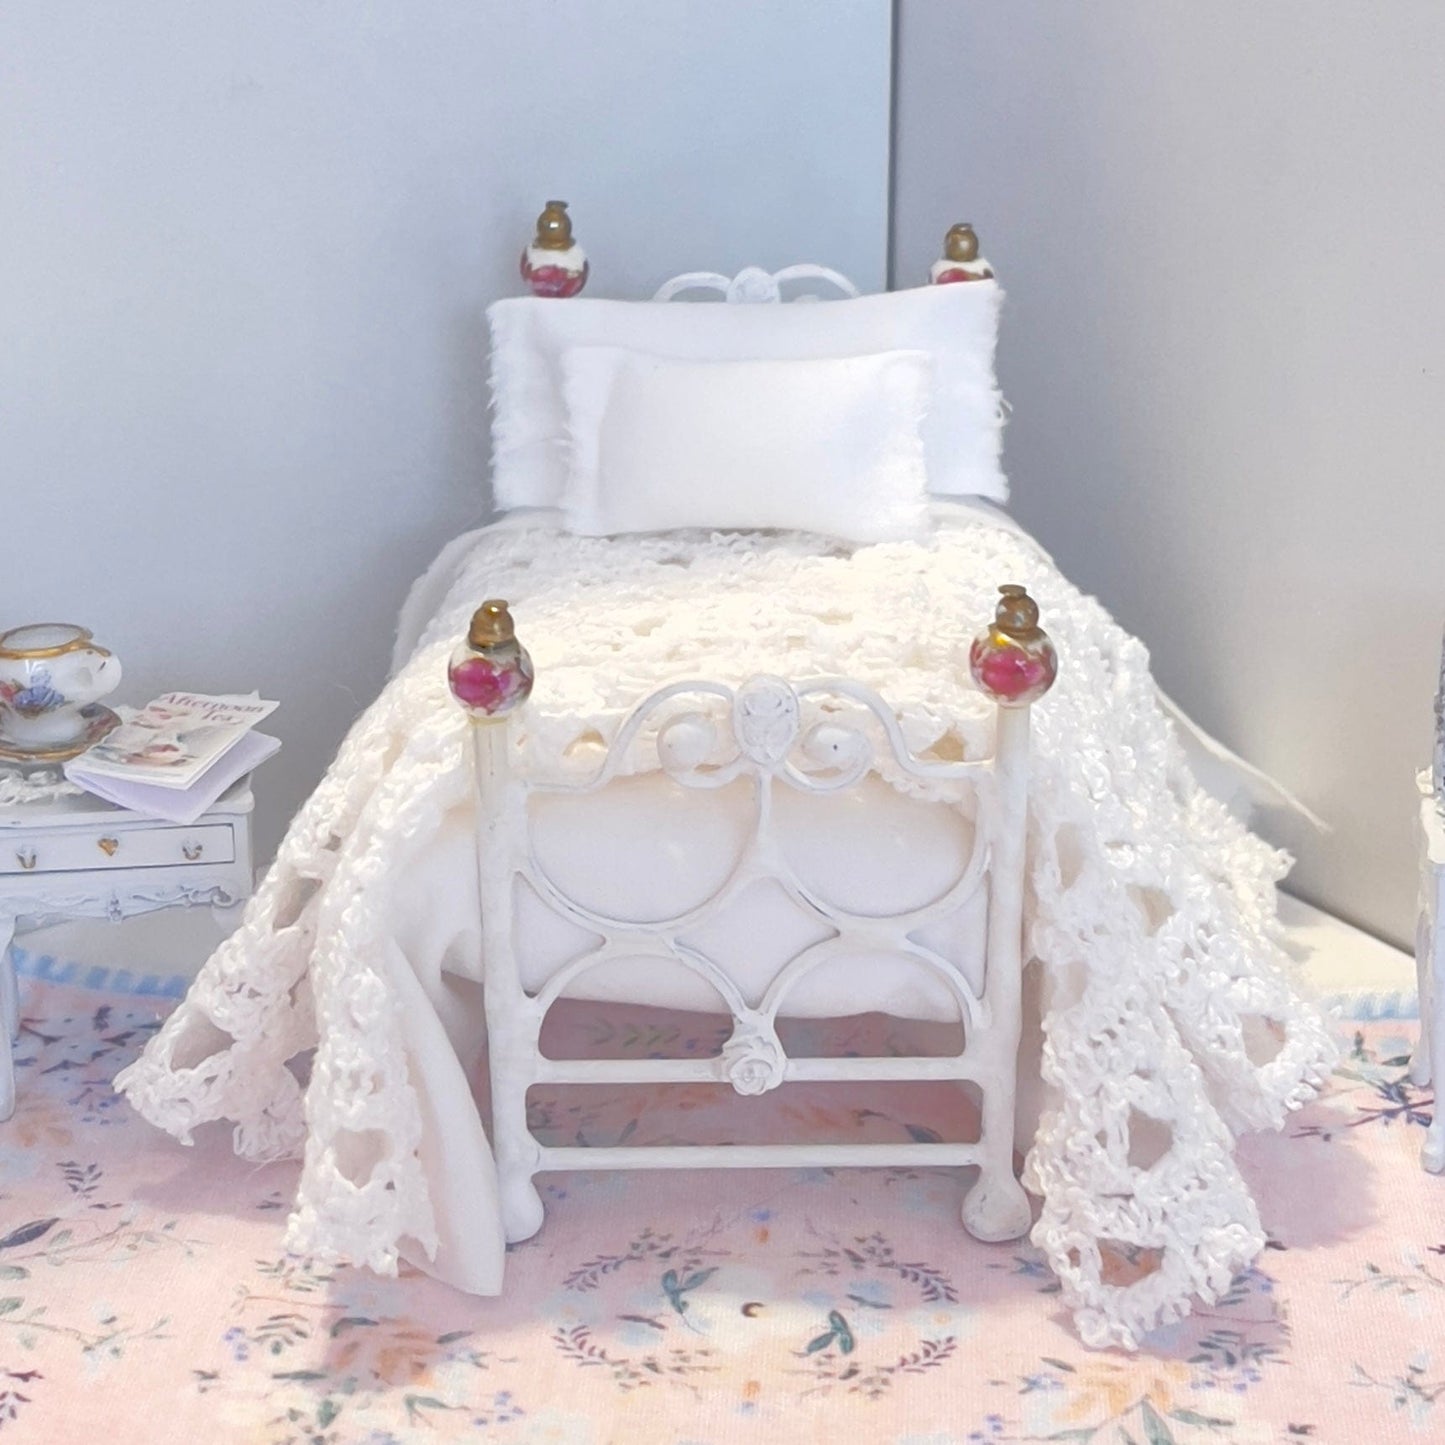 CHANTALLENA Dollhouse Accessories 1:24 Scale |  Five Piece White Cotton Crochet Knit Dollhouse Bedding Set | Petite Twyla